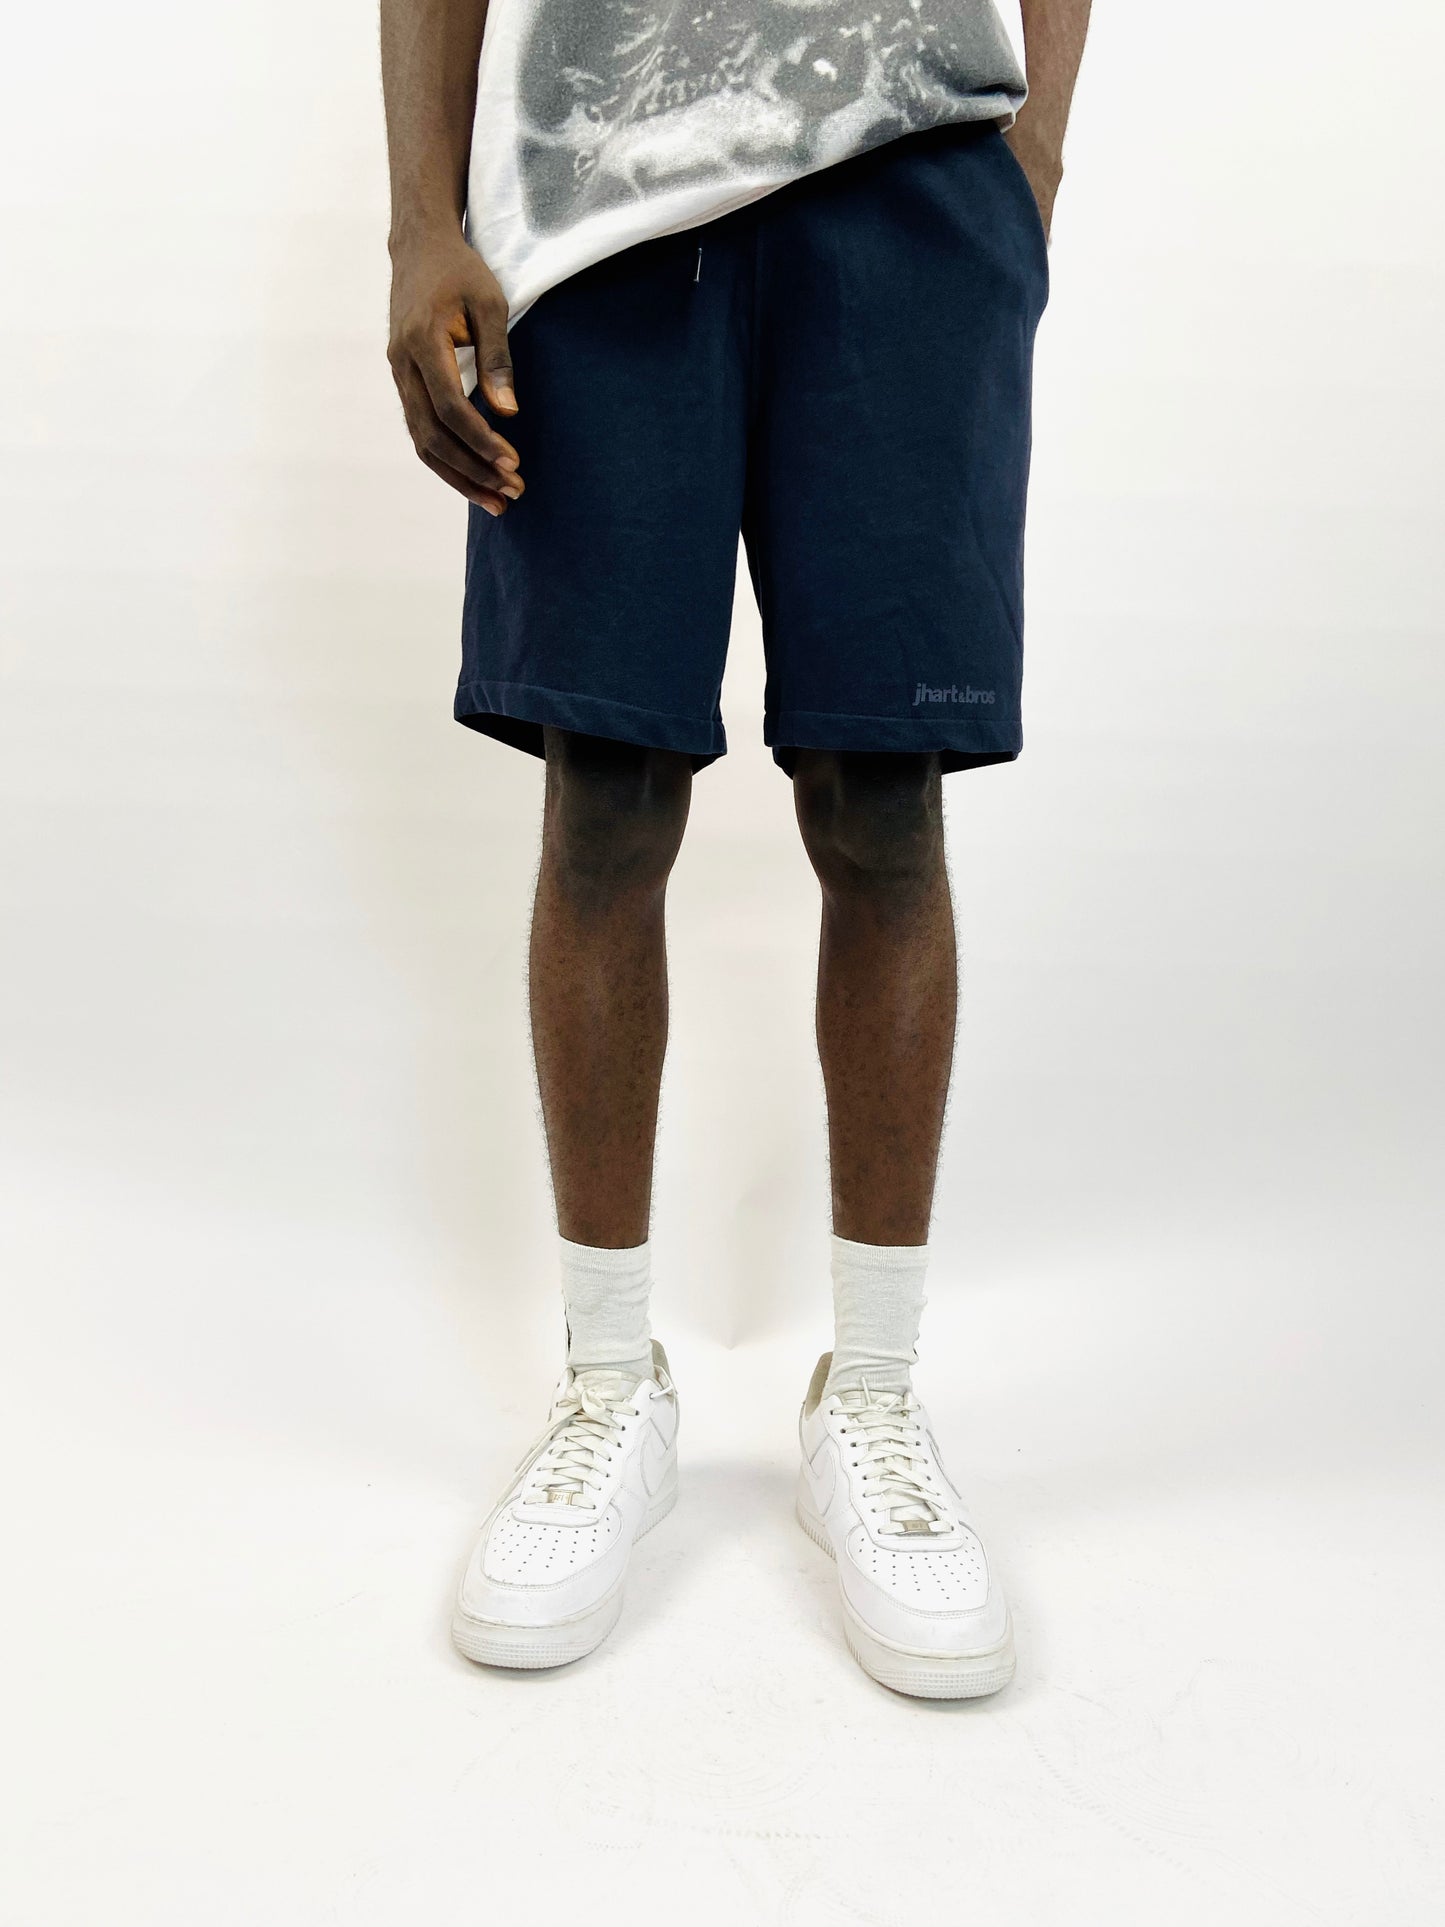 J Hart & Bros Pocket Zip Bermuda Shorts in Navy blue